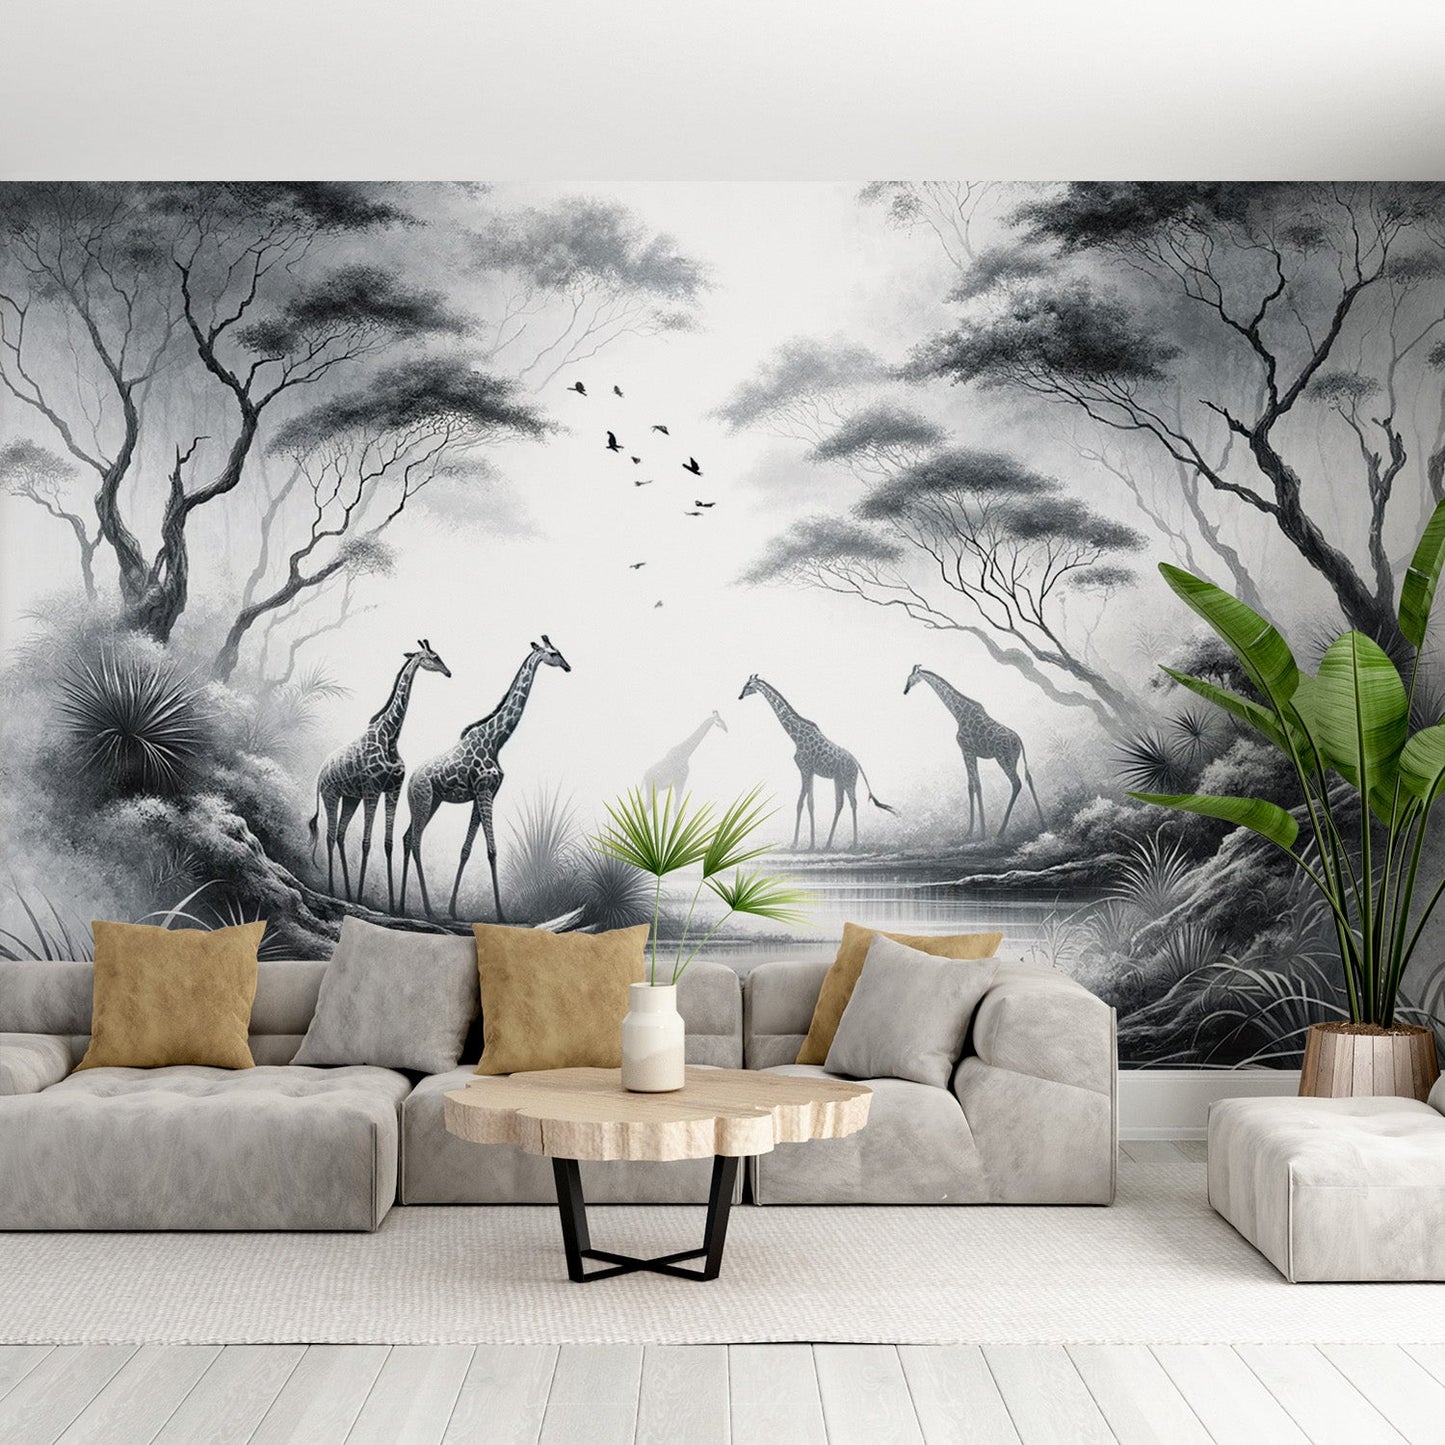 Black and white jungle wallpaper | Giraffes and river